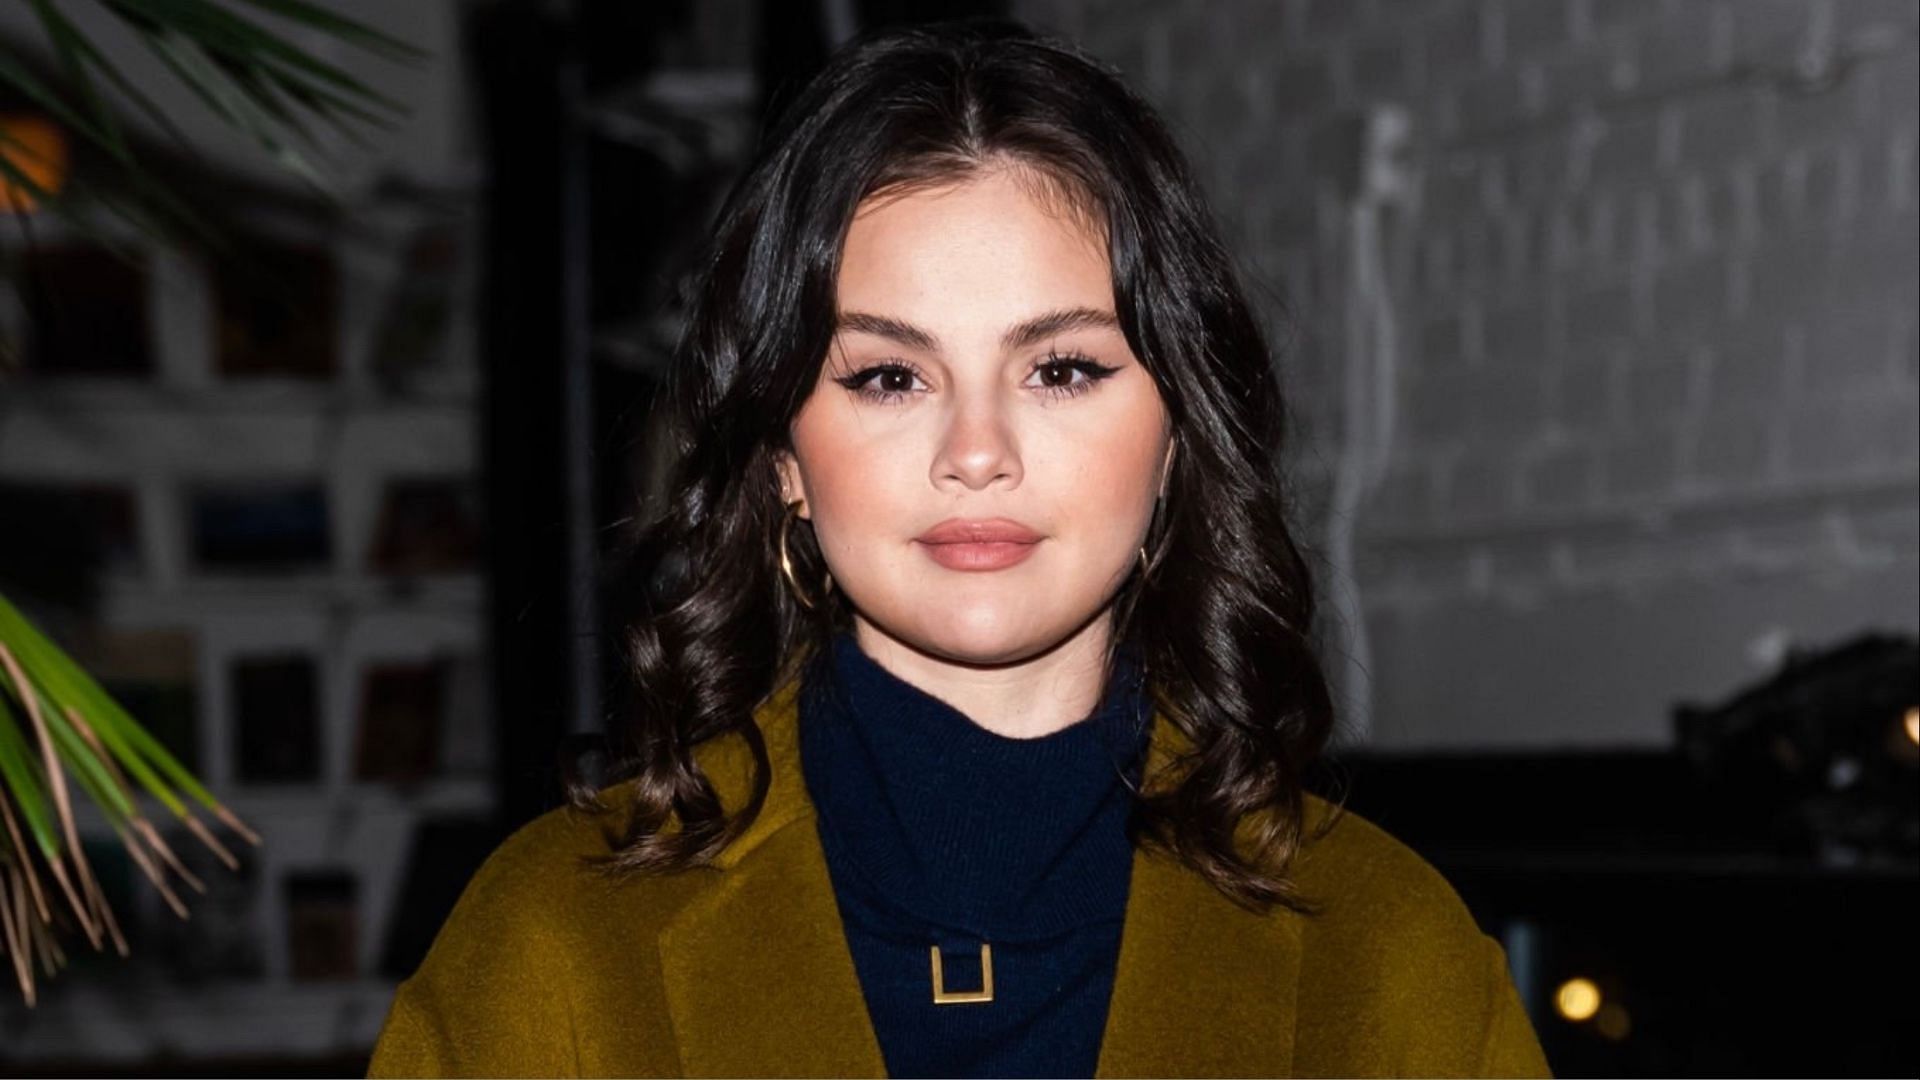 Selena Gomez attends the FYC screening of the Apple Original Films &ldquo;Selena Gomez: My Mind &amp; Me&rdquo; in New York City. (Photo via Gotham/Getty Images)